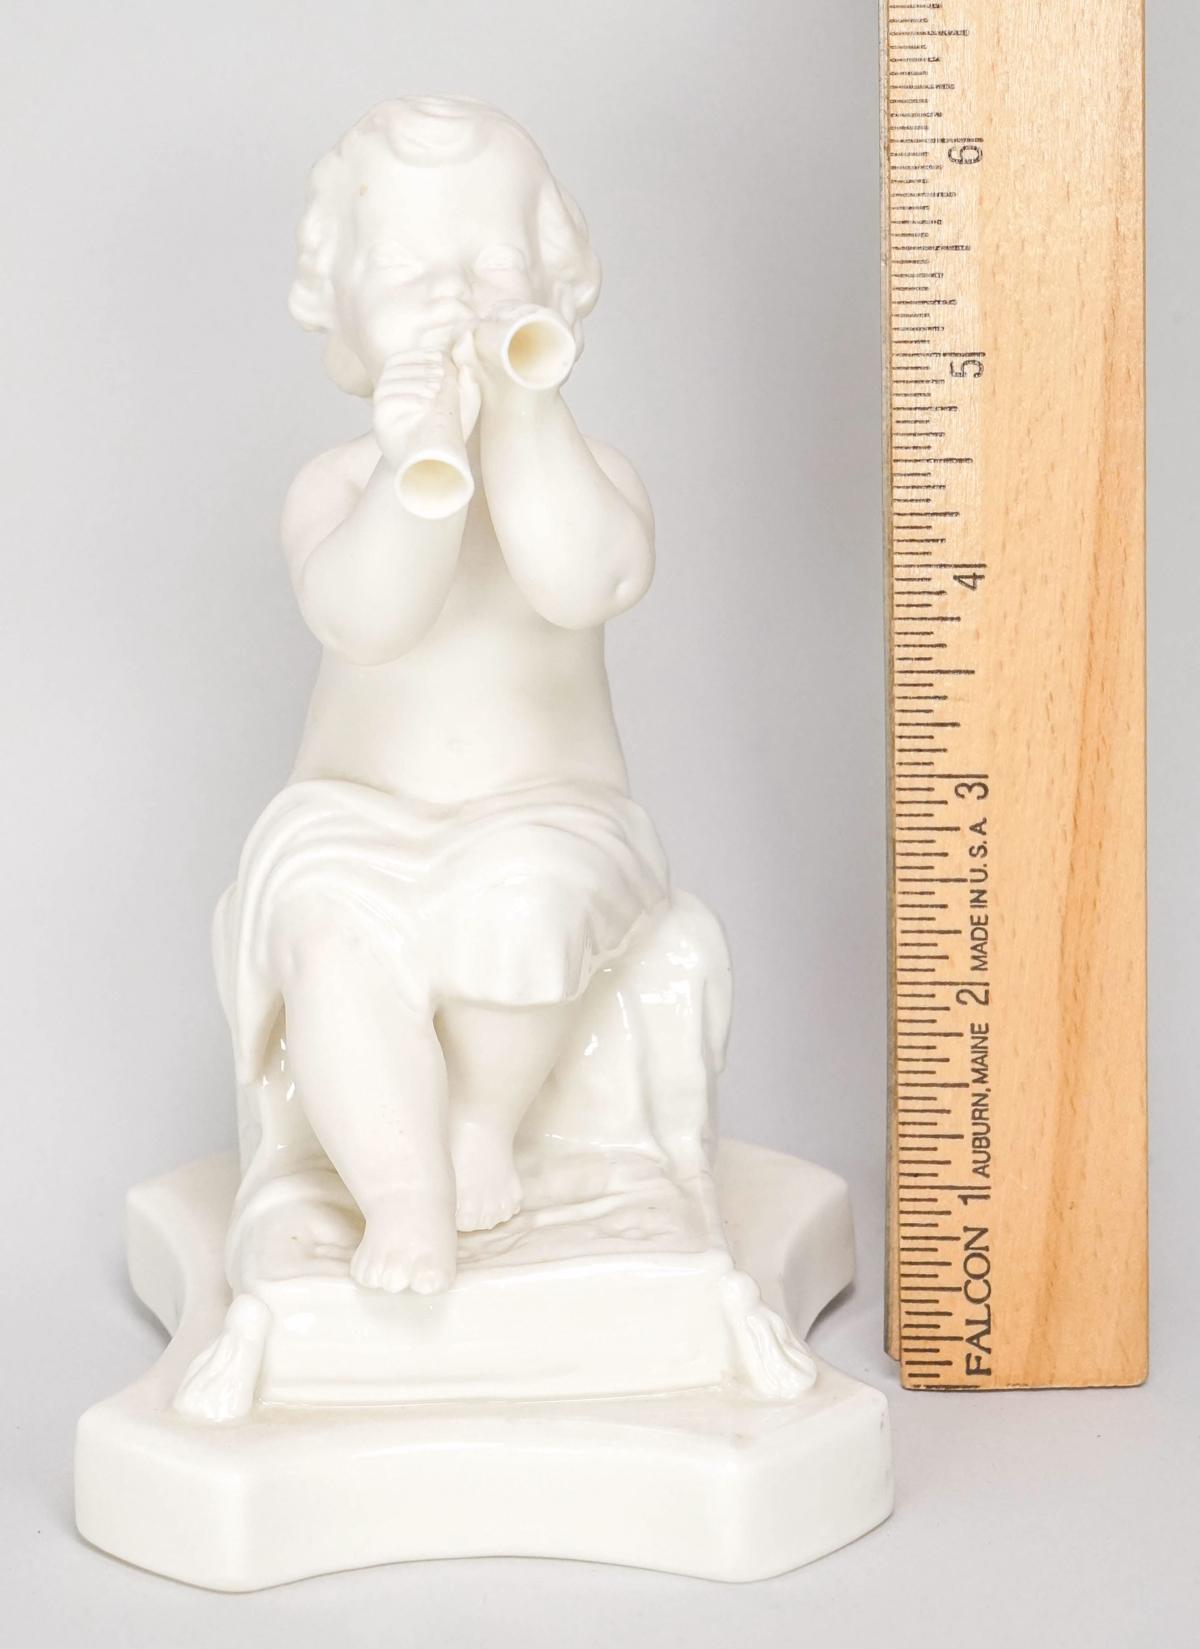 Belleek Porcelain Figurine, Minstrel With Pipes No. 349